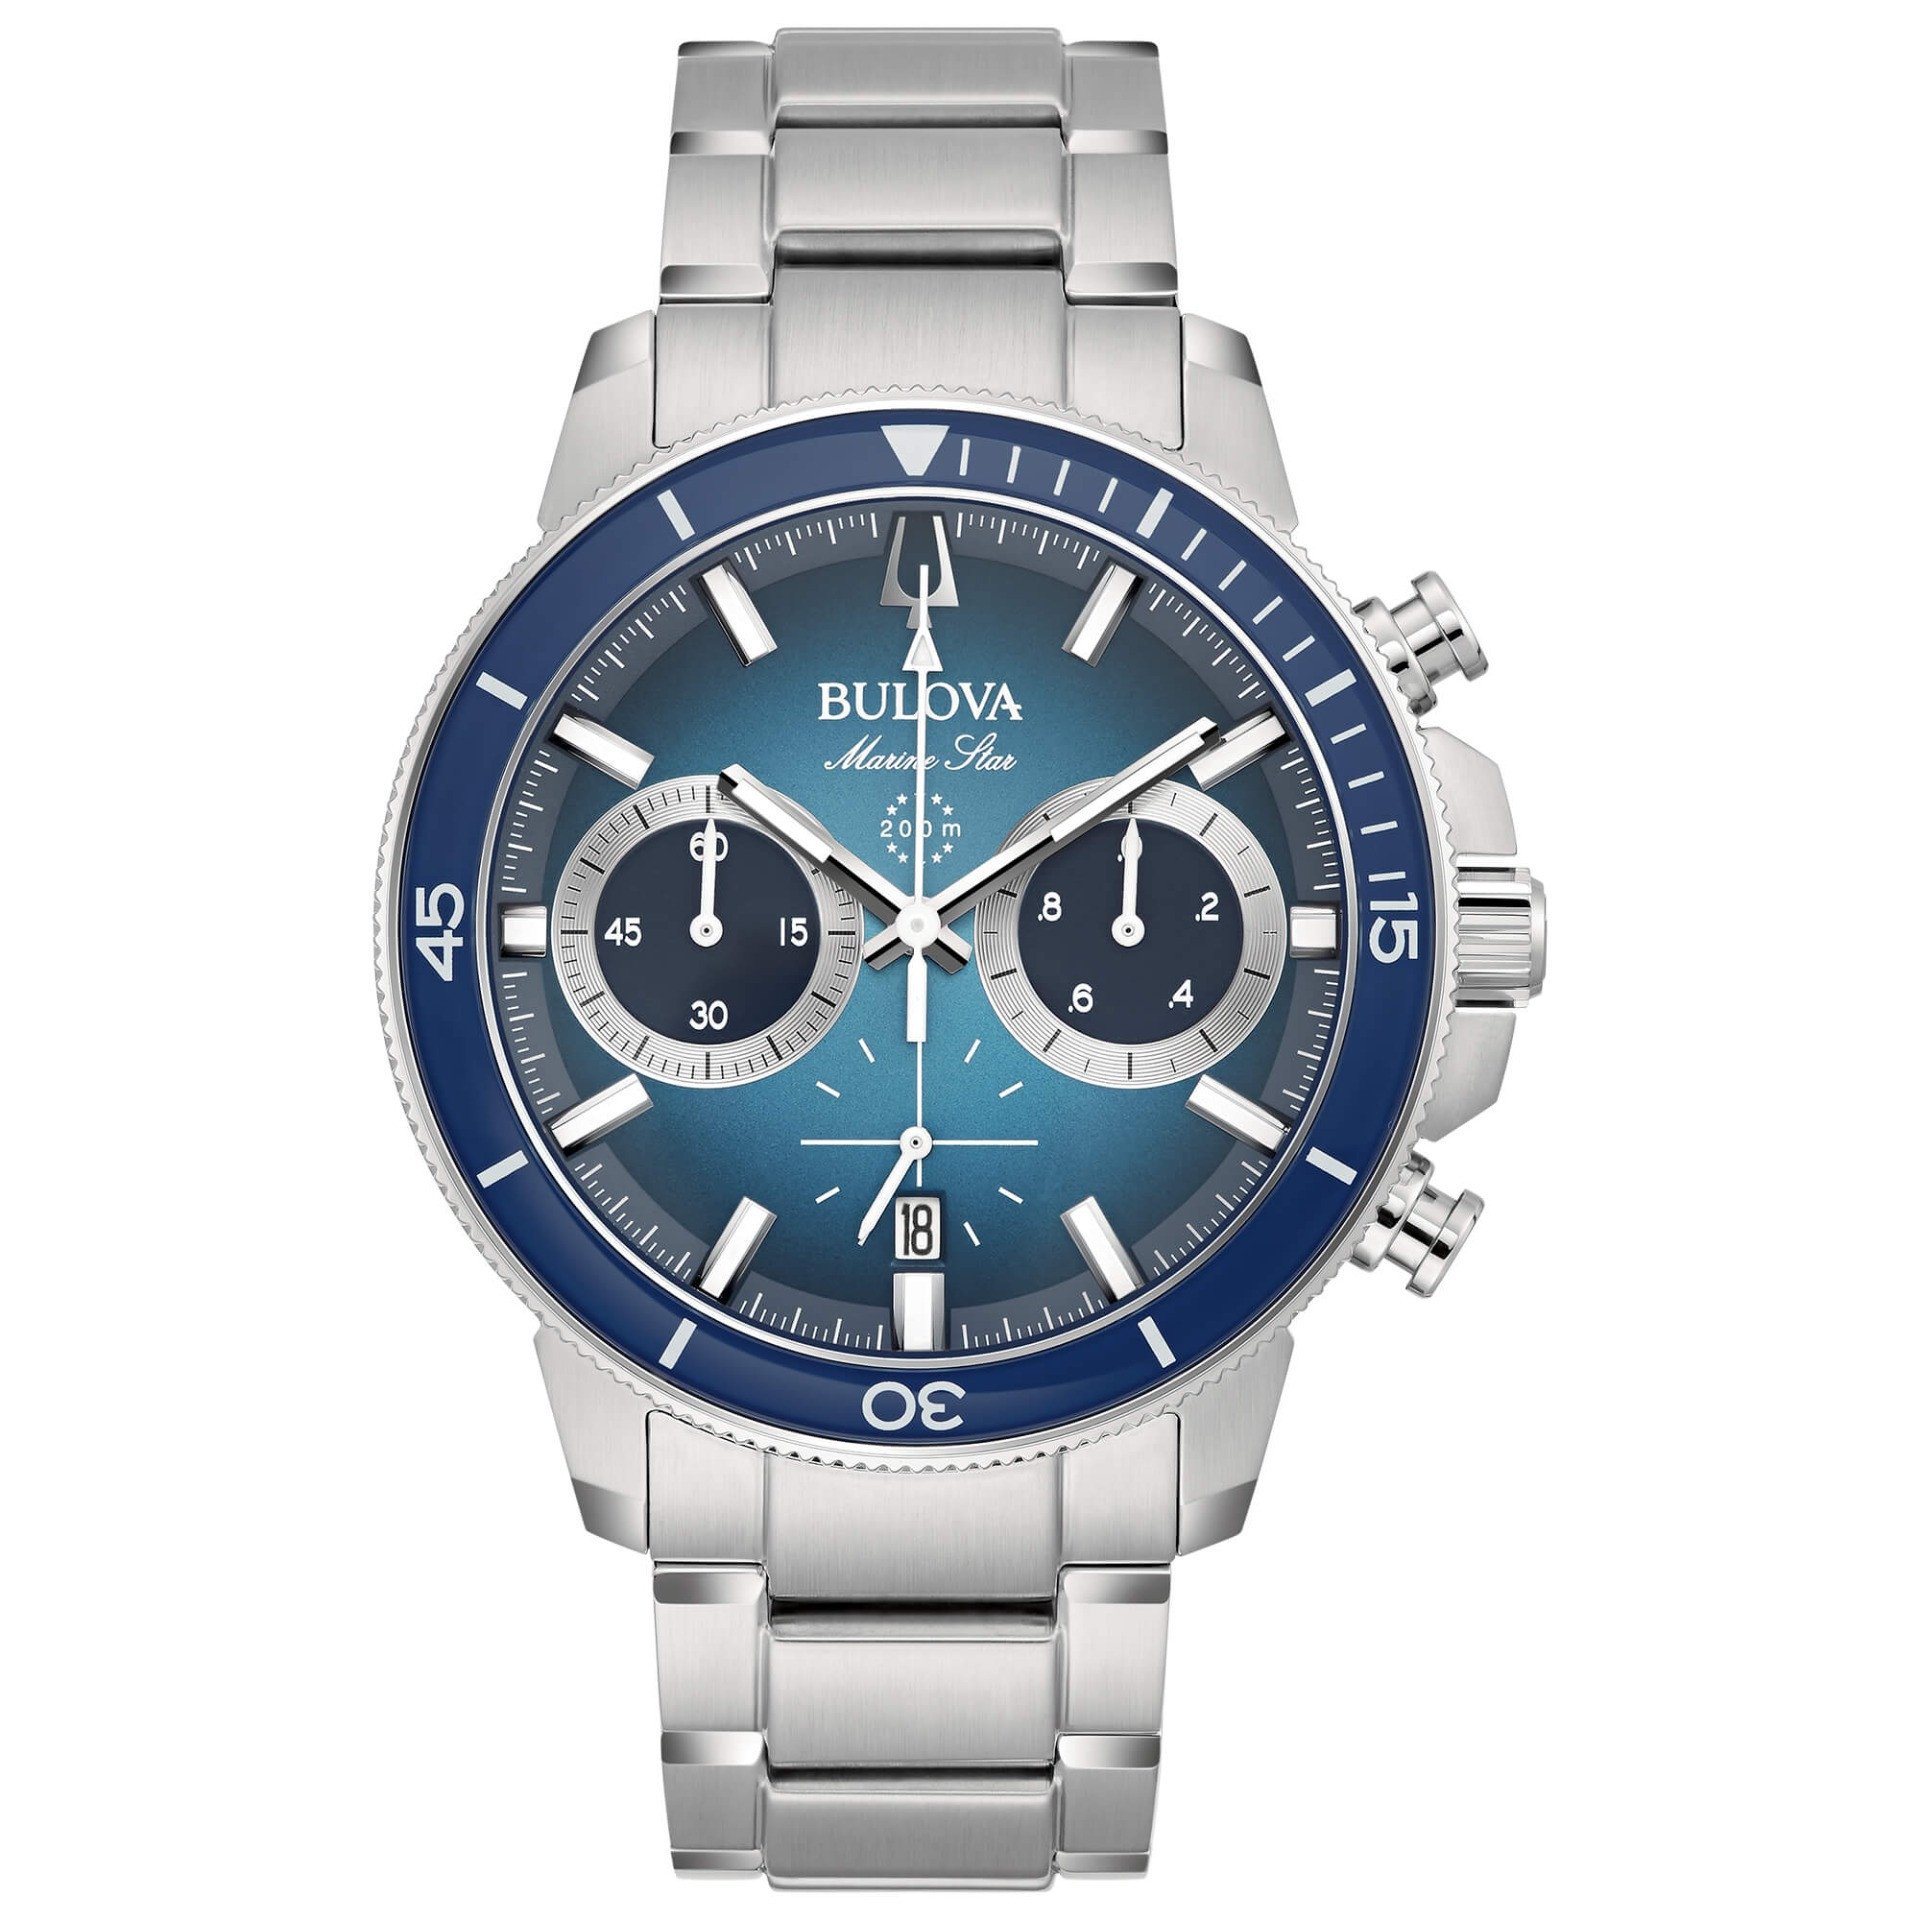 Reloj Bulova 96b380 azul hombre | Relojería Joyería